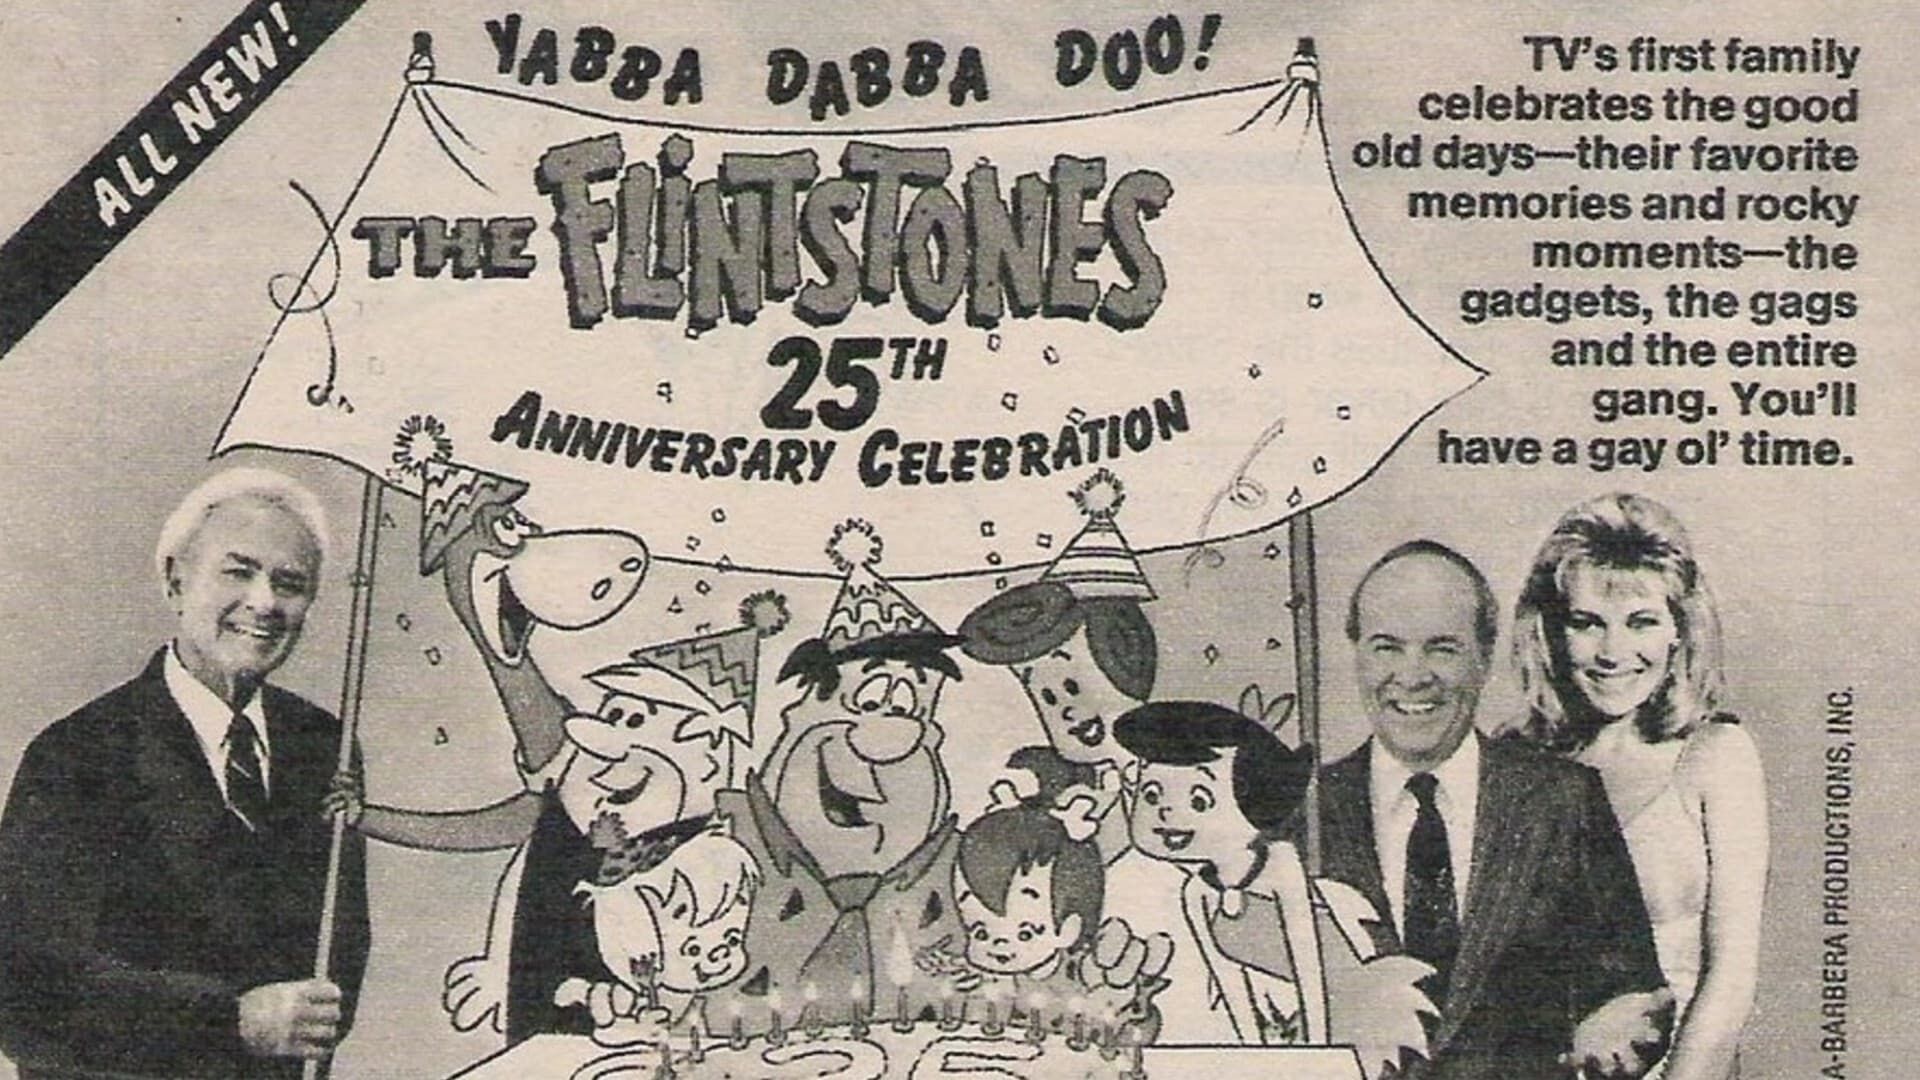 The Flintstones' 25th Anniversary Celebration background